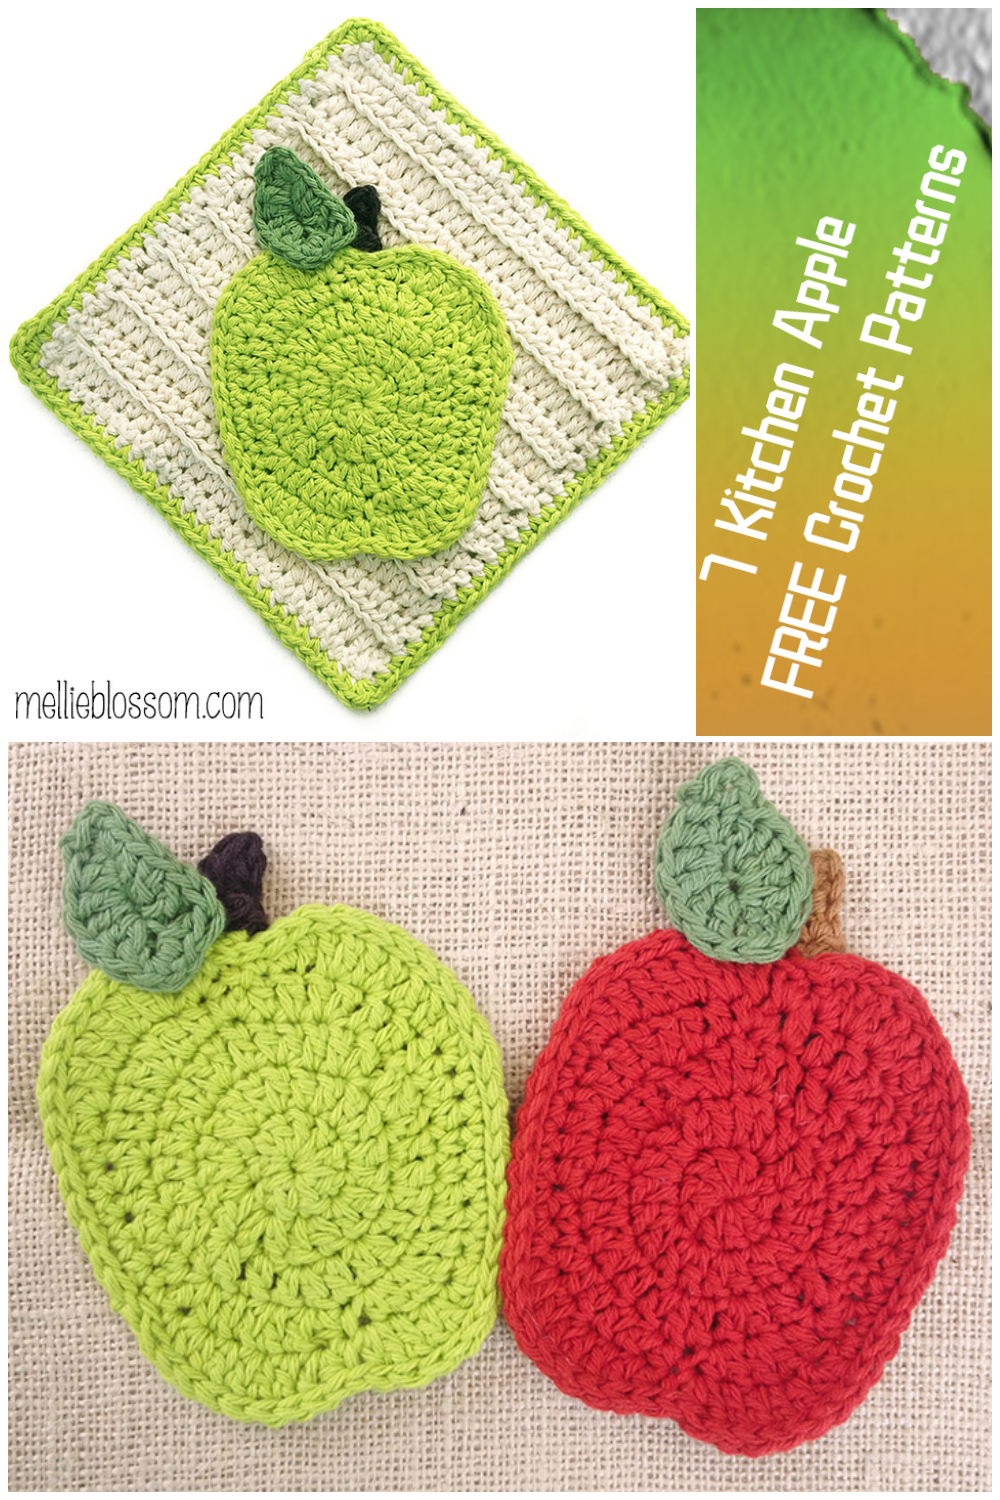 7 Kitchen Apple FREE Crochet Patterns